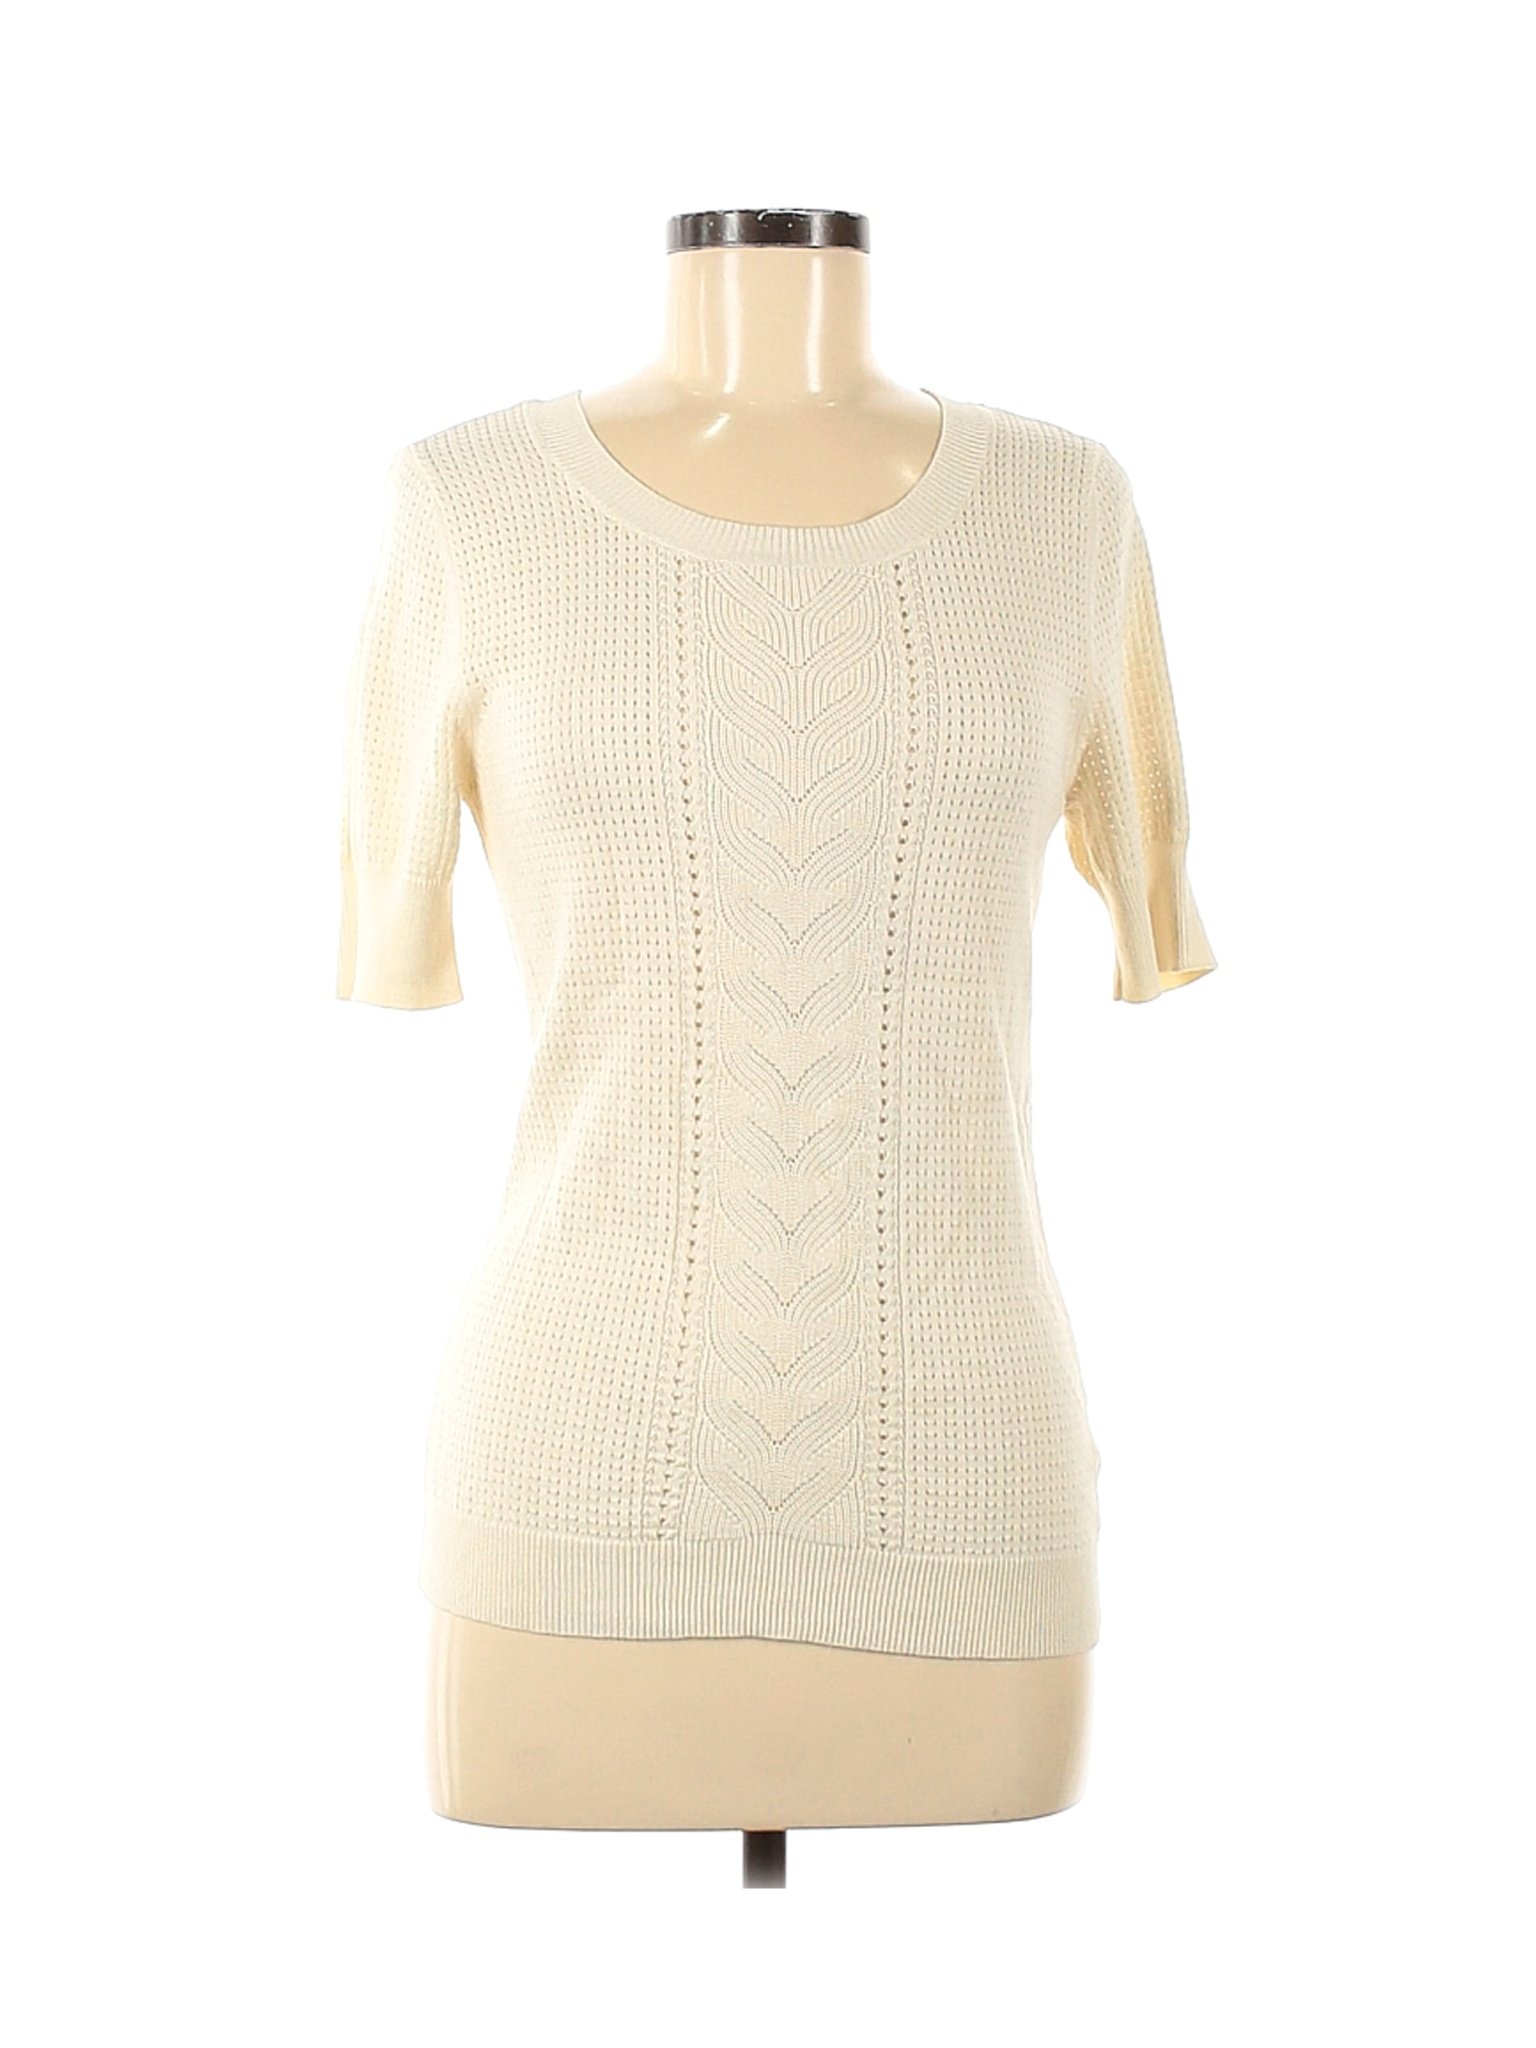 Banana Republic Factory Store Women Ivory Pullover Sweater M | eBay